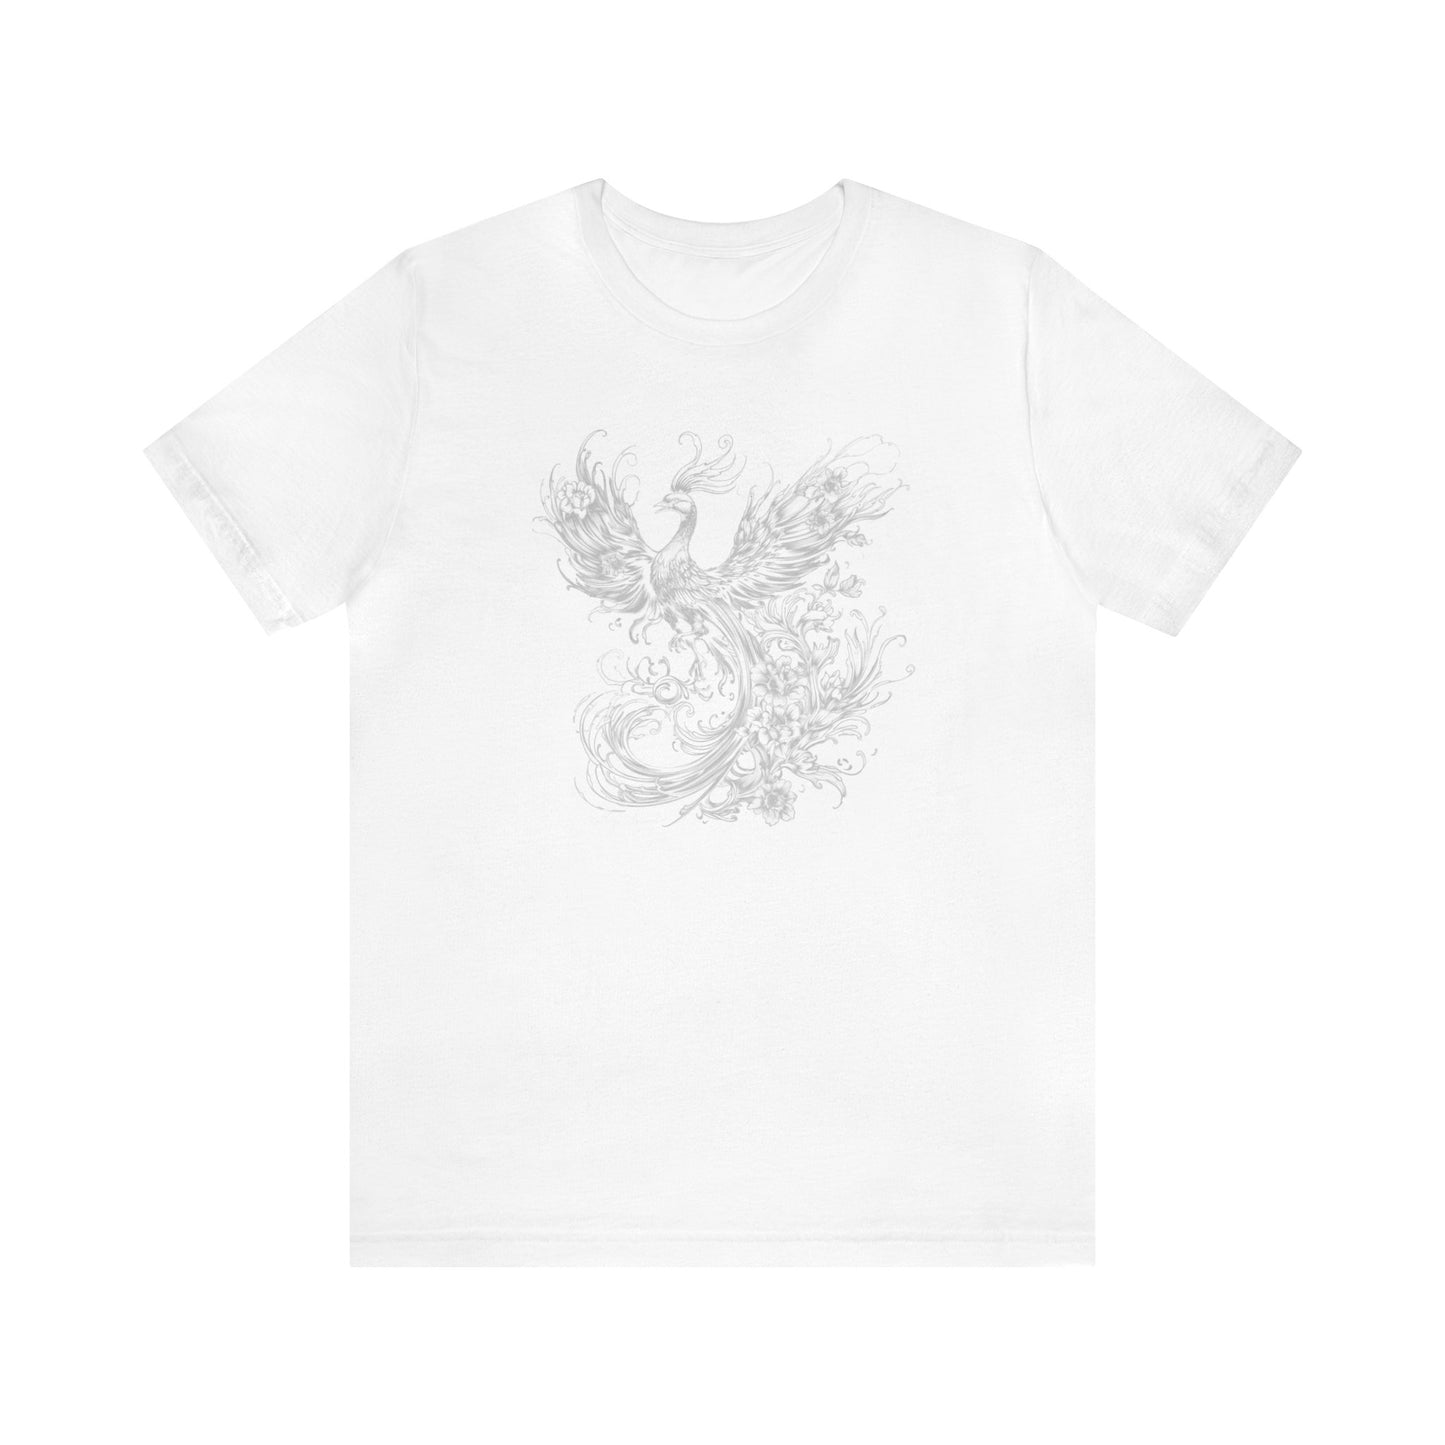 Phoenix Rising (White) Jersey Short Sleeve Tee